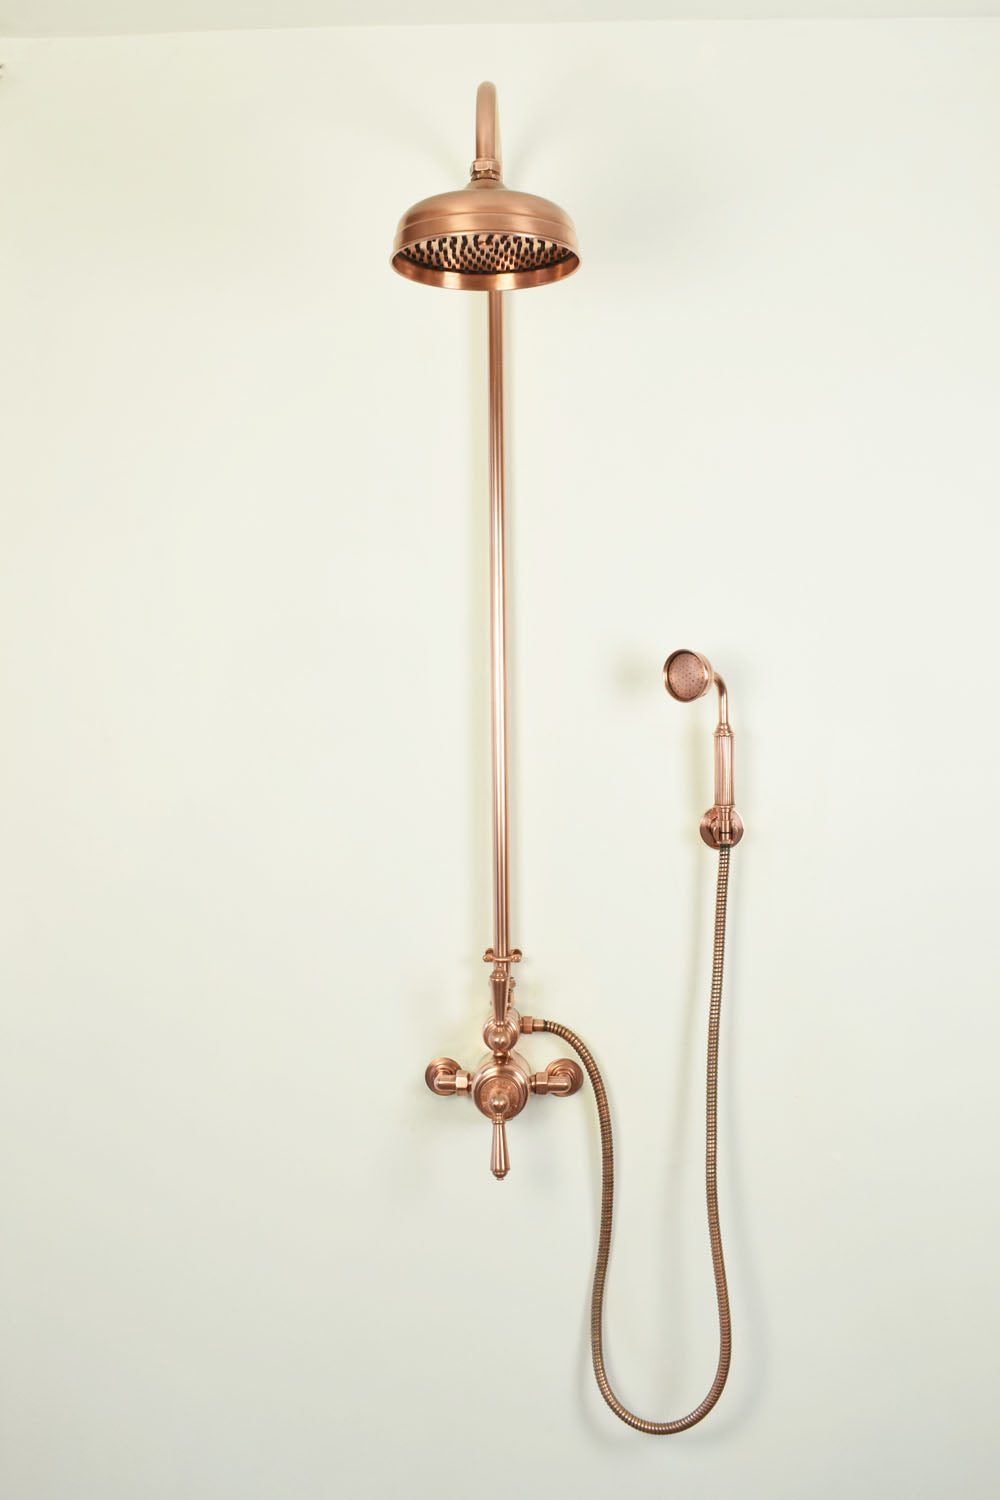 Copper Thermostatic Shower Genuine Mixer shower